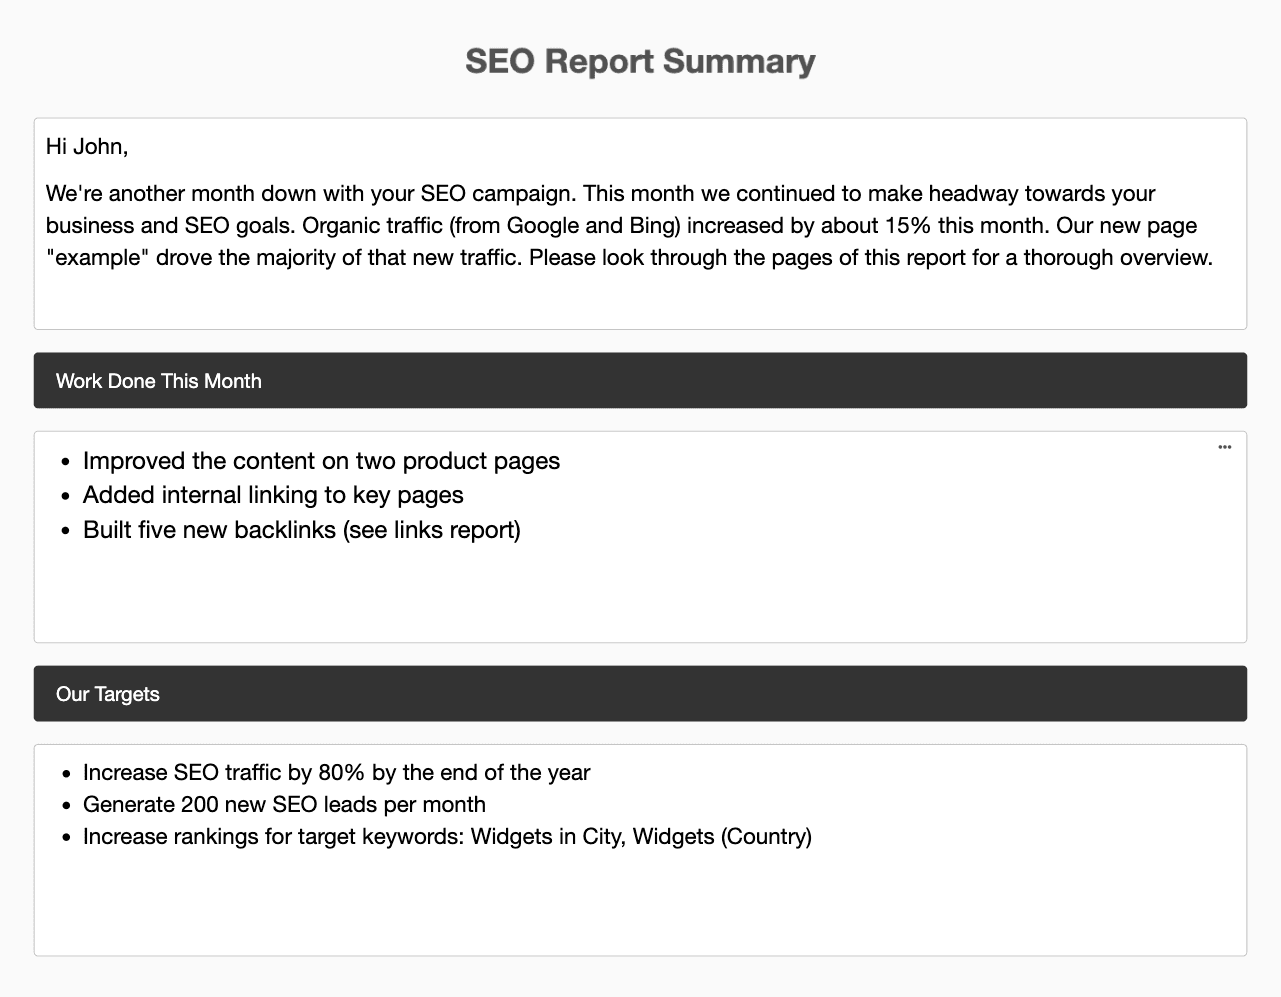 AgencyAnalytics SEO Report Summary